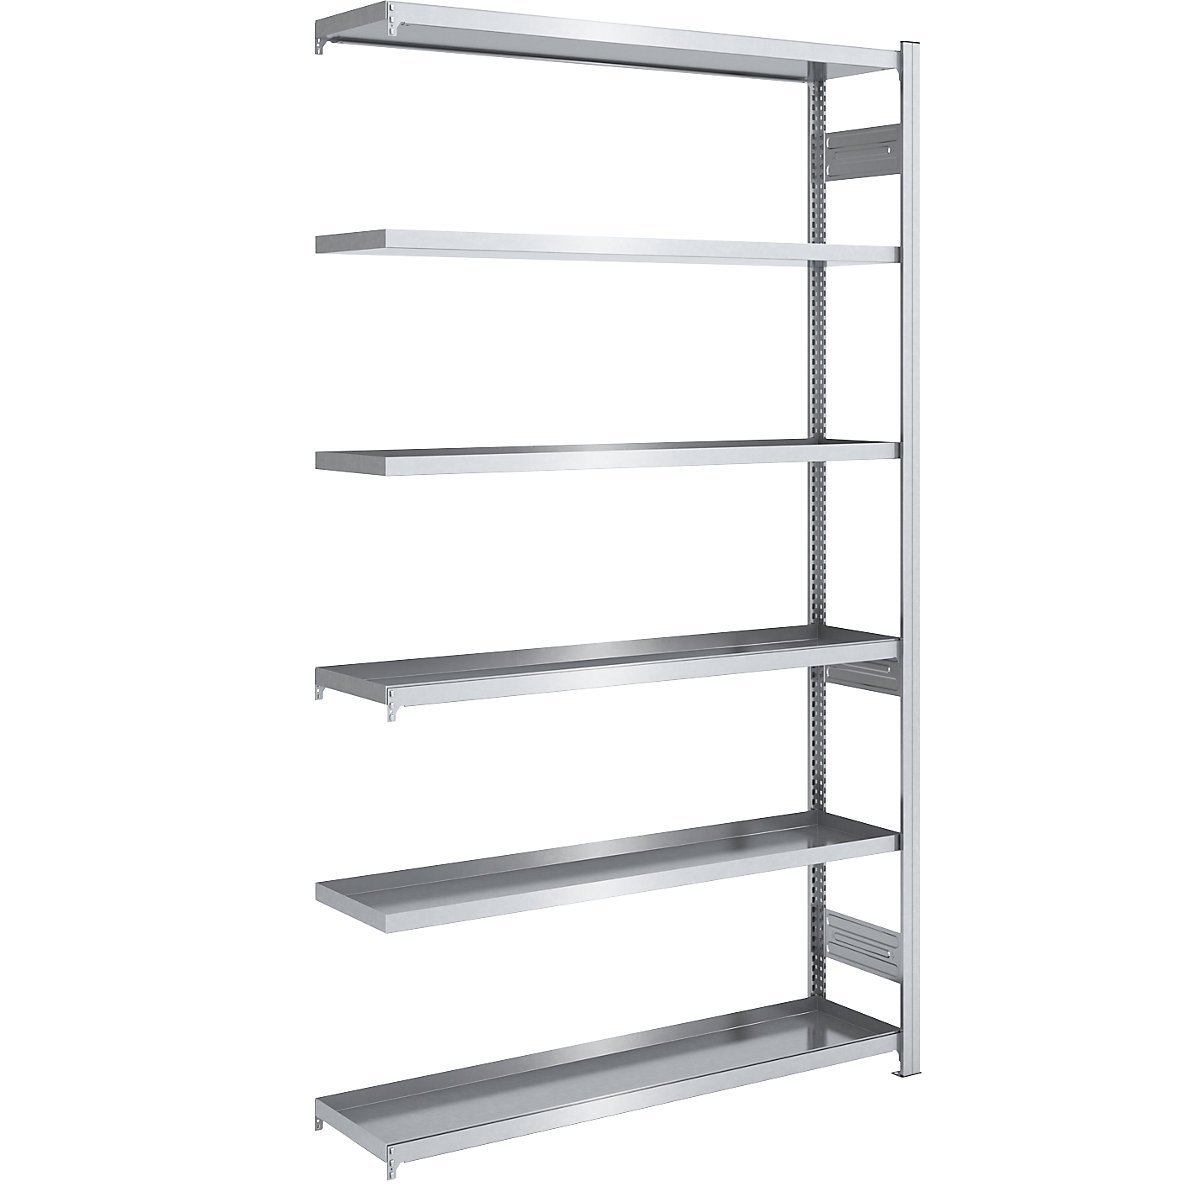 Tray shelf unit – hofe, shelf unit height 2500 mm, tray width 1300 mm, tray depth 400 mm, extension shelf unit